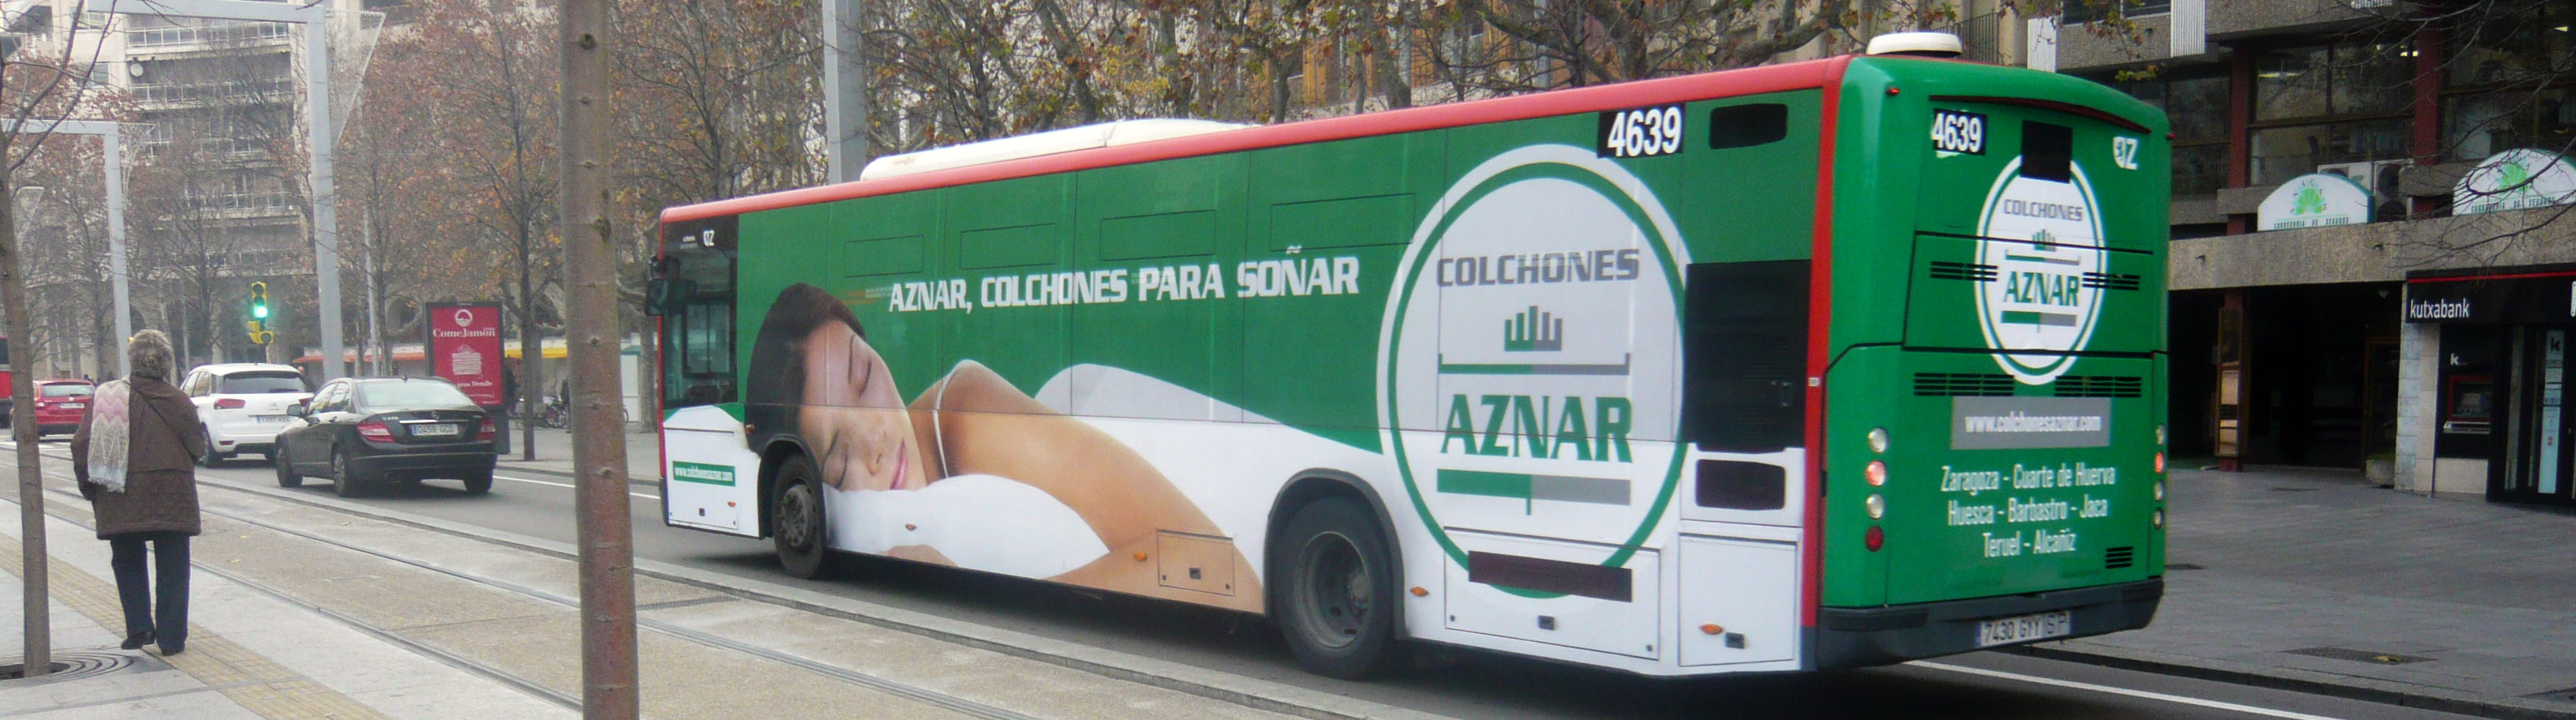 autobusAznar2